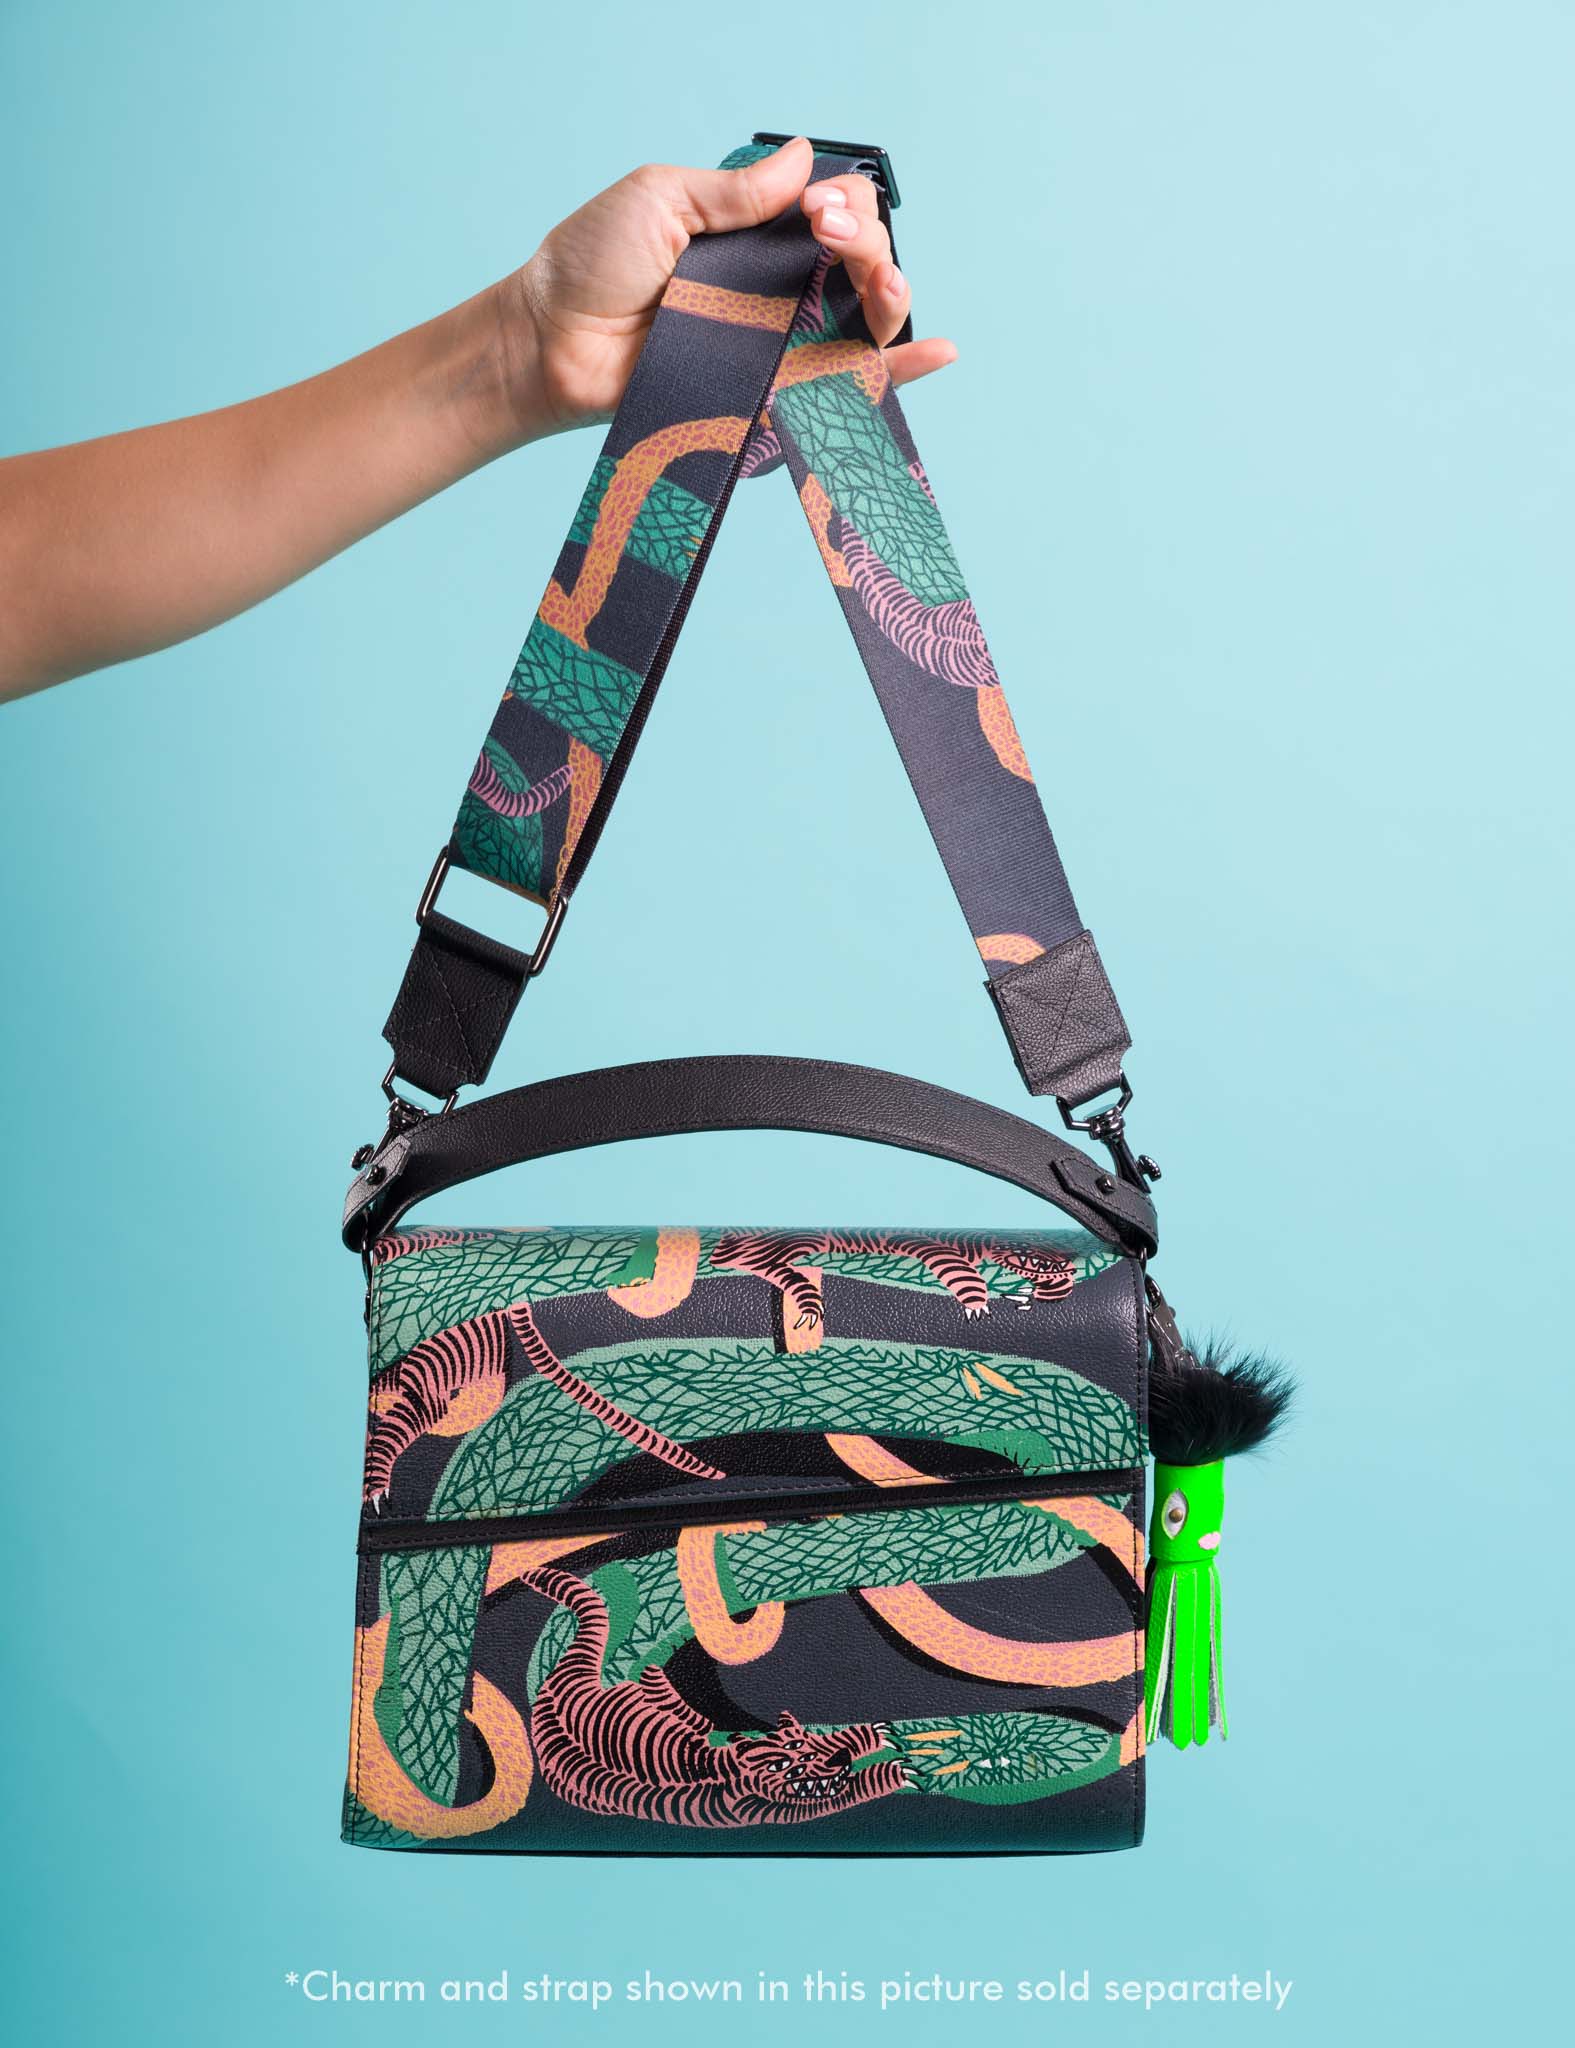 Medium Crossbody Handbag Black Leather - Tiger And Snake Print